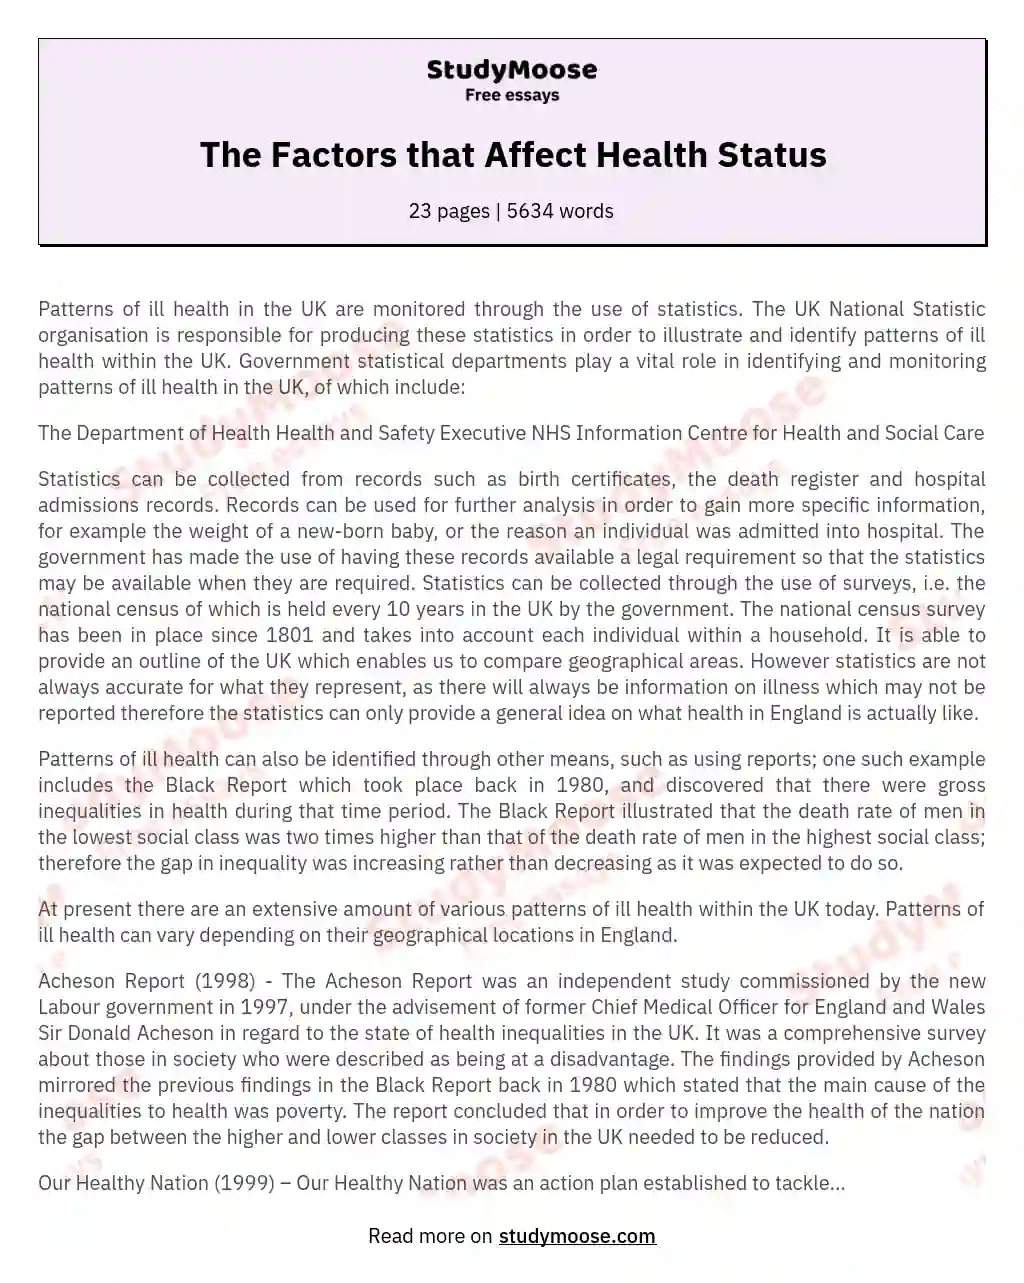 The Factors that Affect Health Status essay